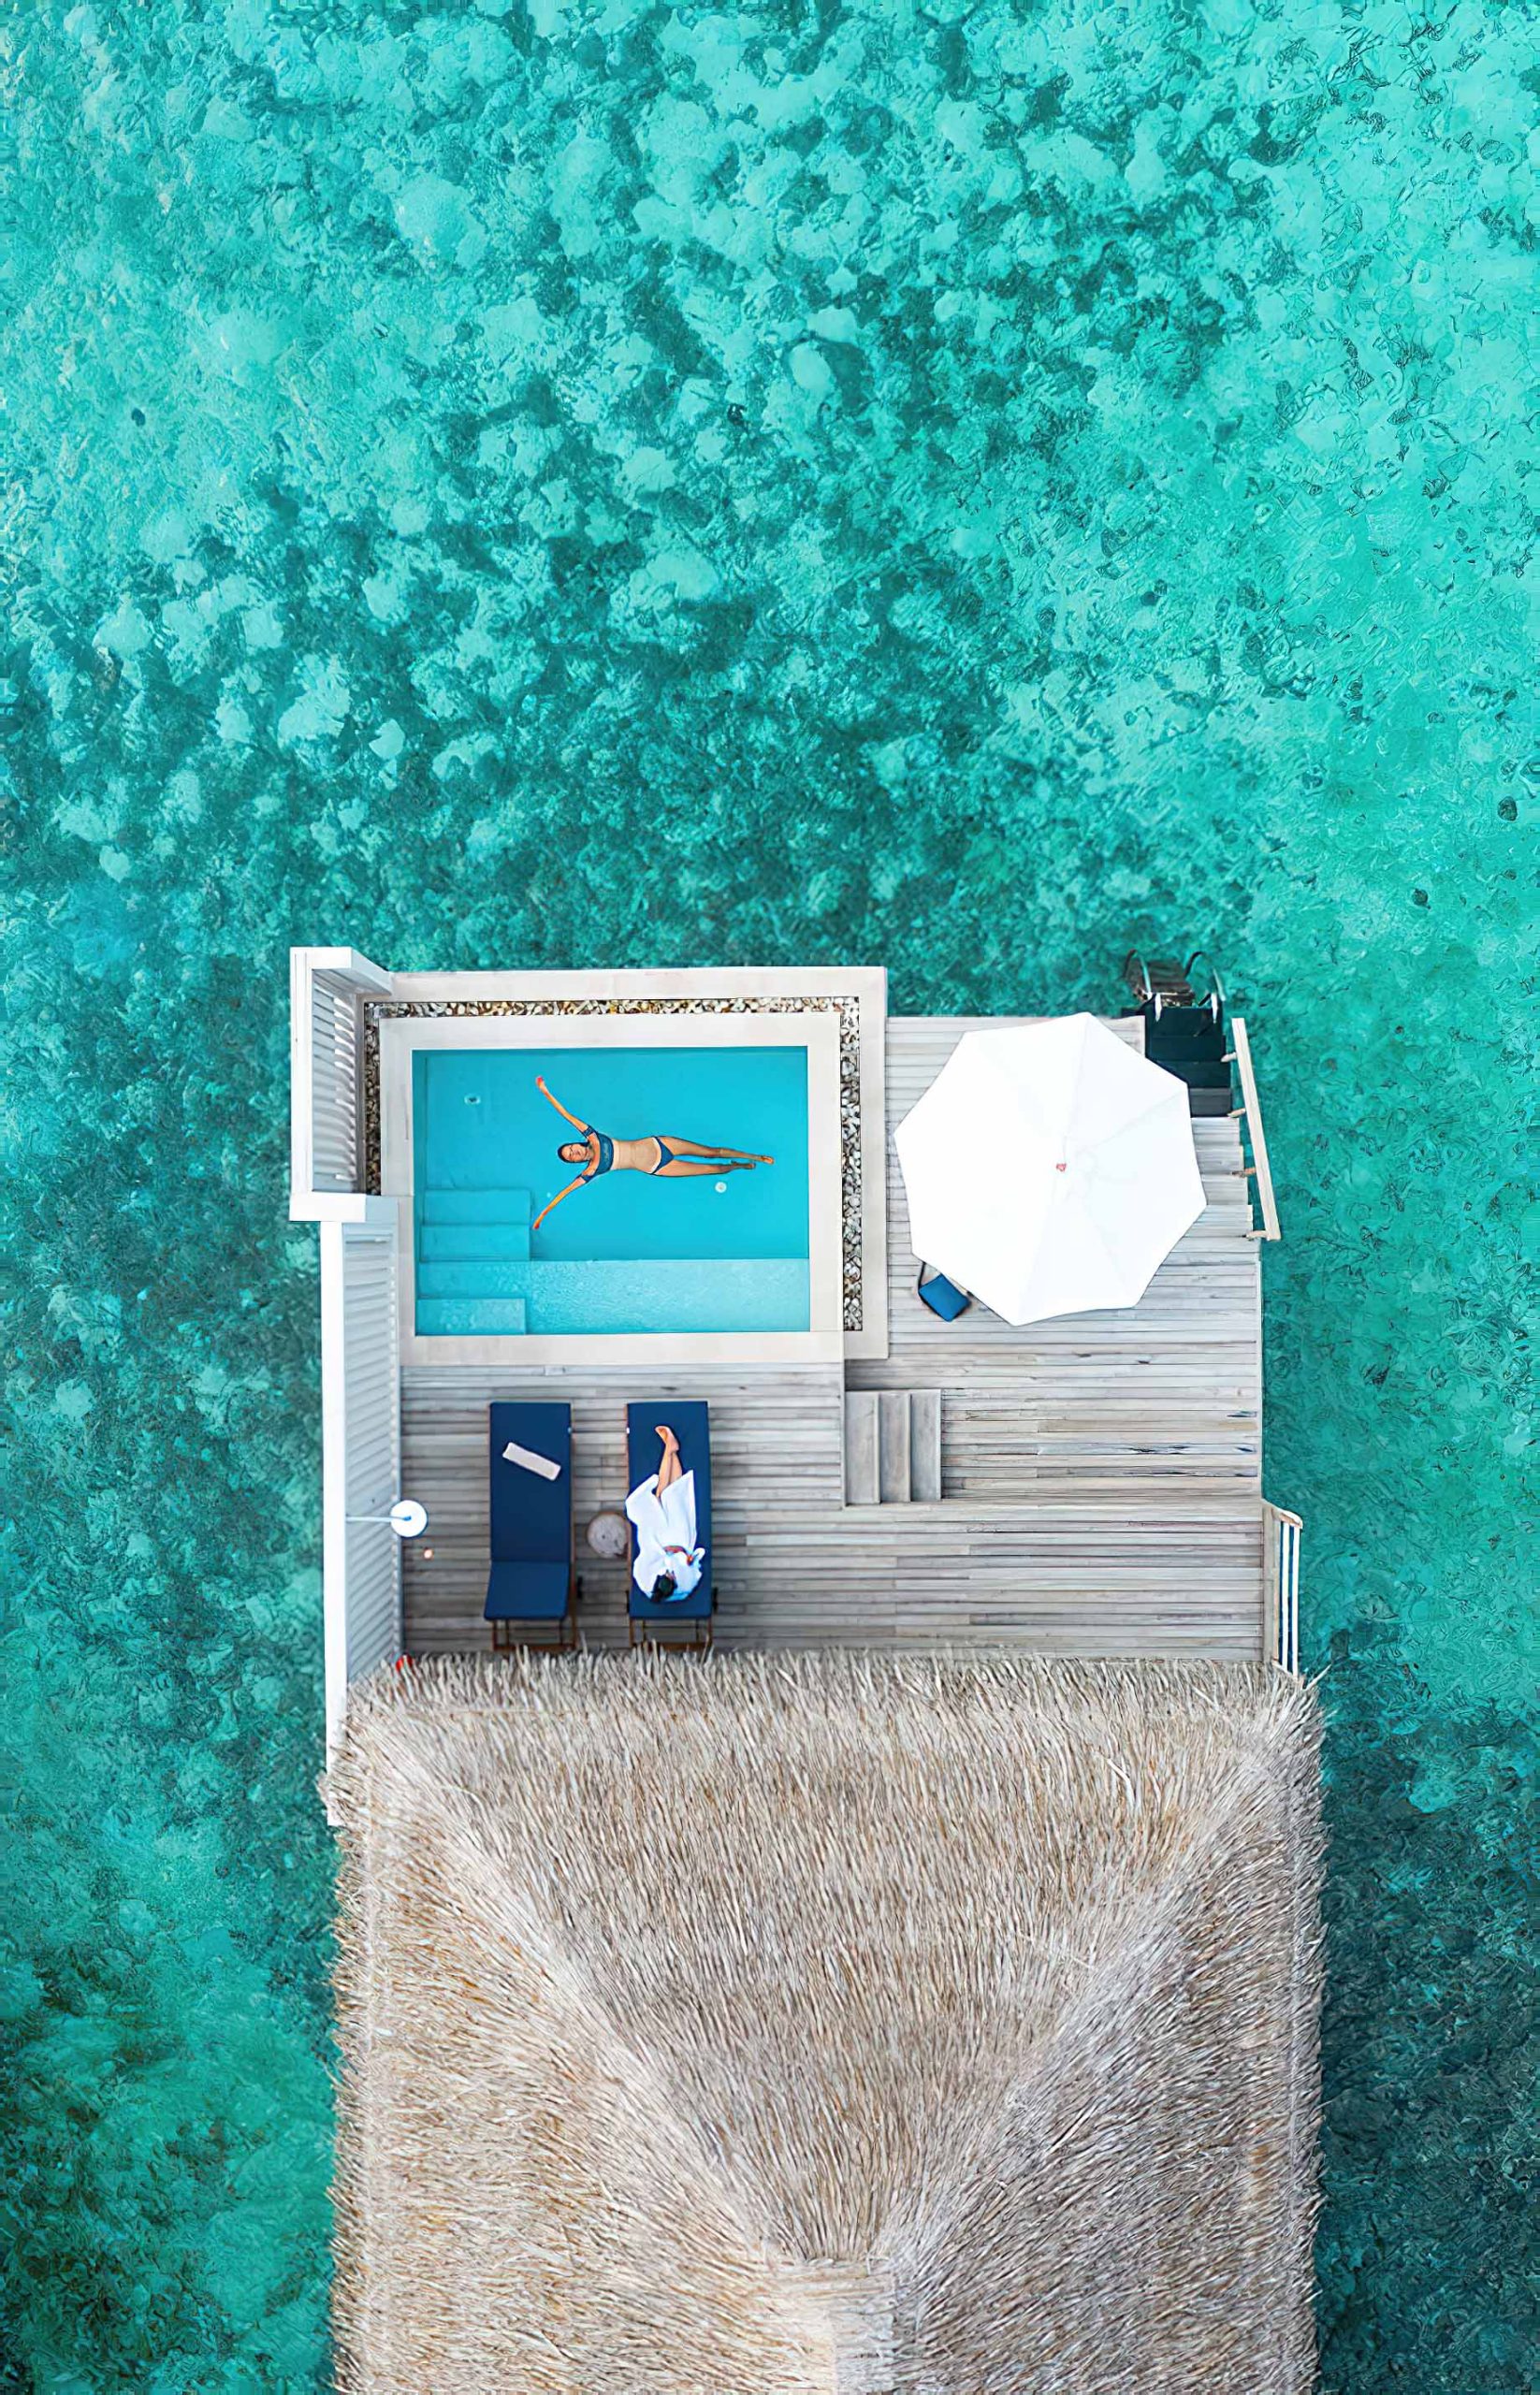 Baglioni Resort Maldives – Maagau Island, Rinbudhoo, Maldives – Pool Water Villa Overhead Aerial View